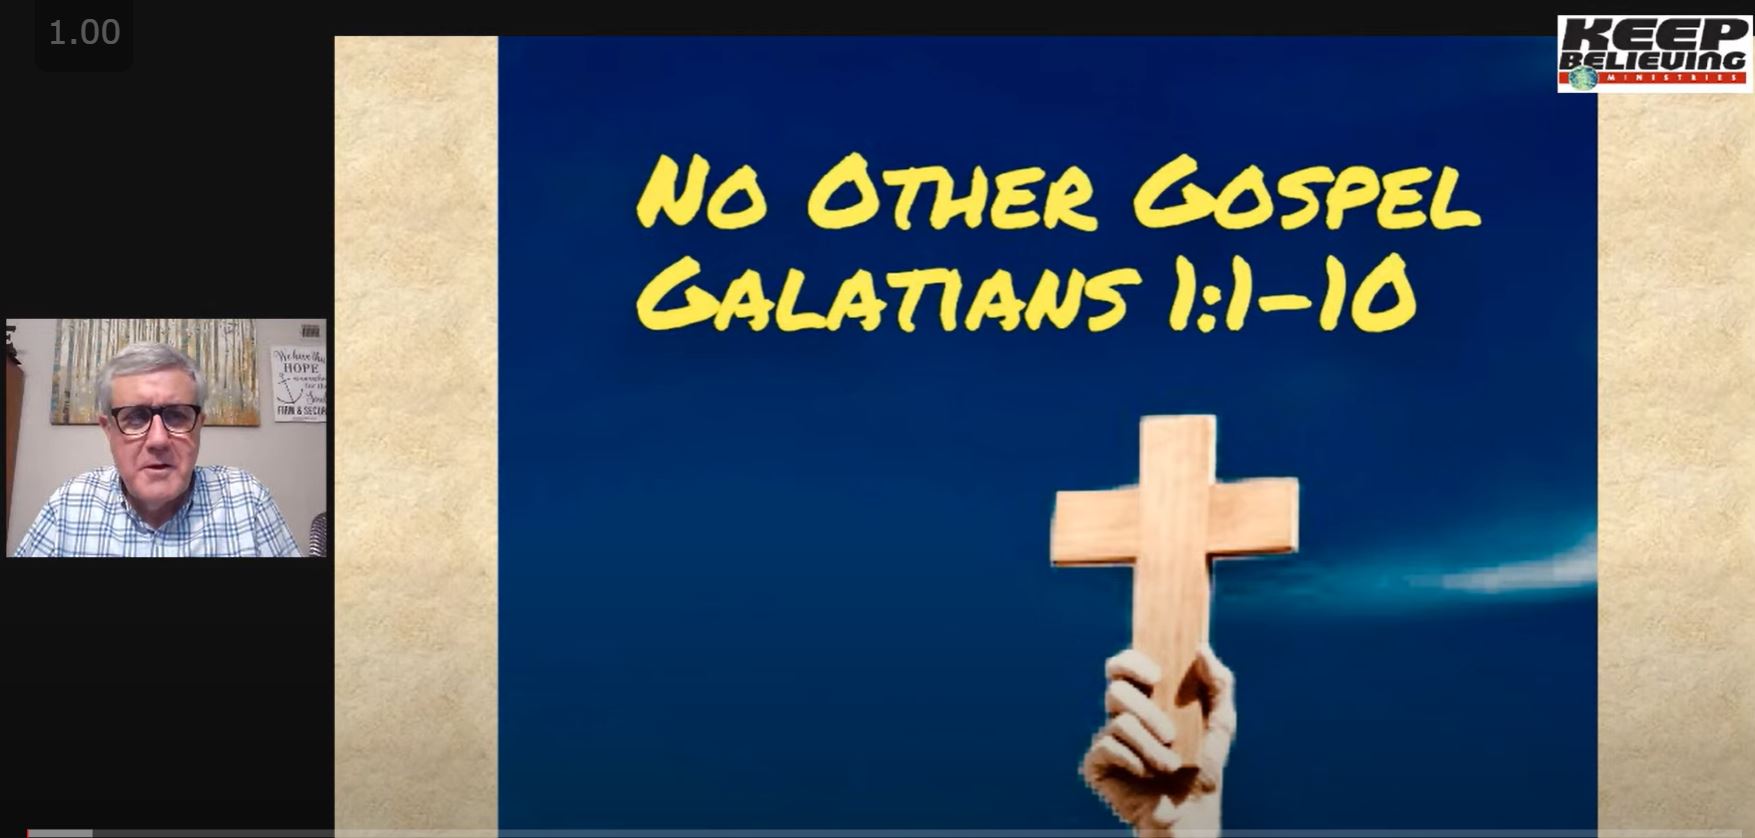 No Other Gospel (Galatians 1:1-10)